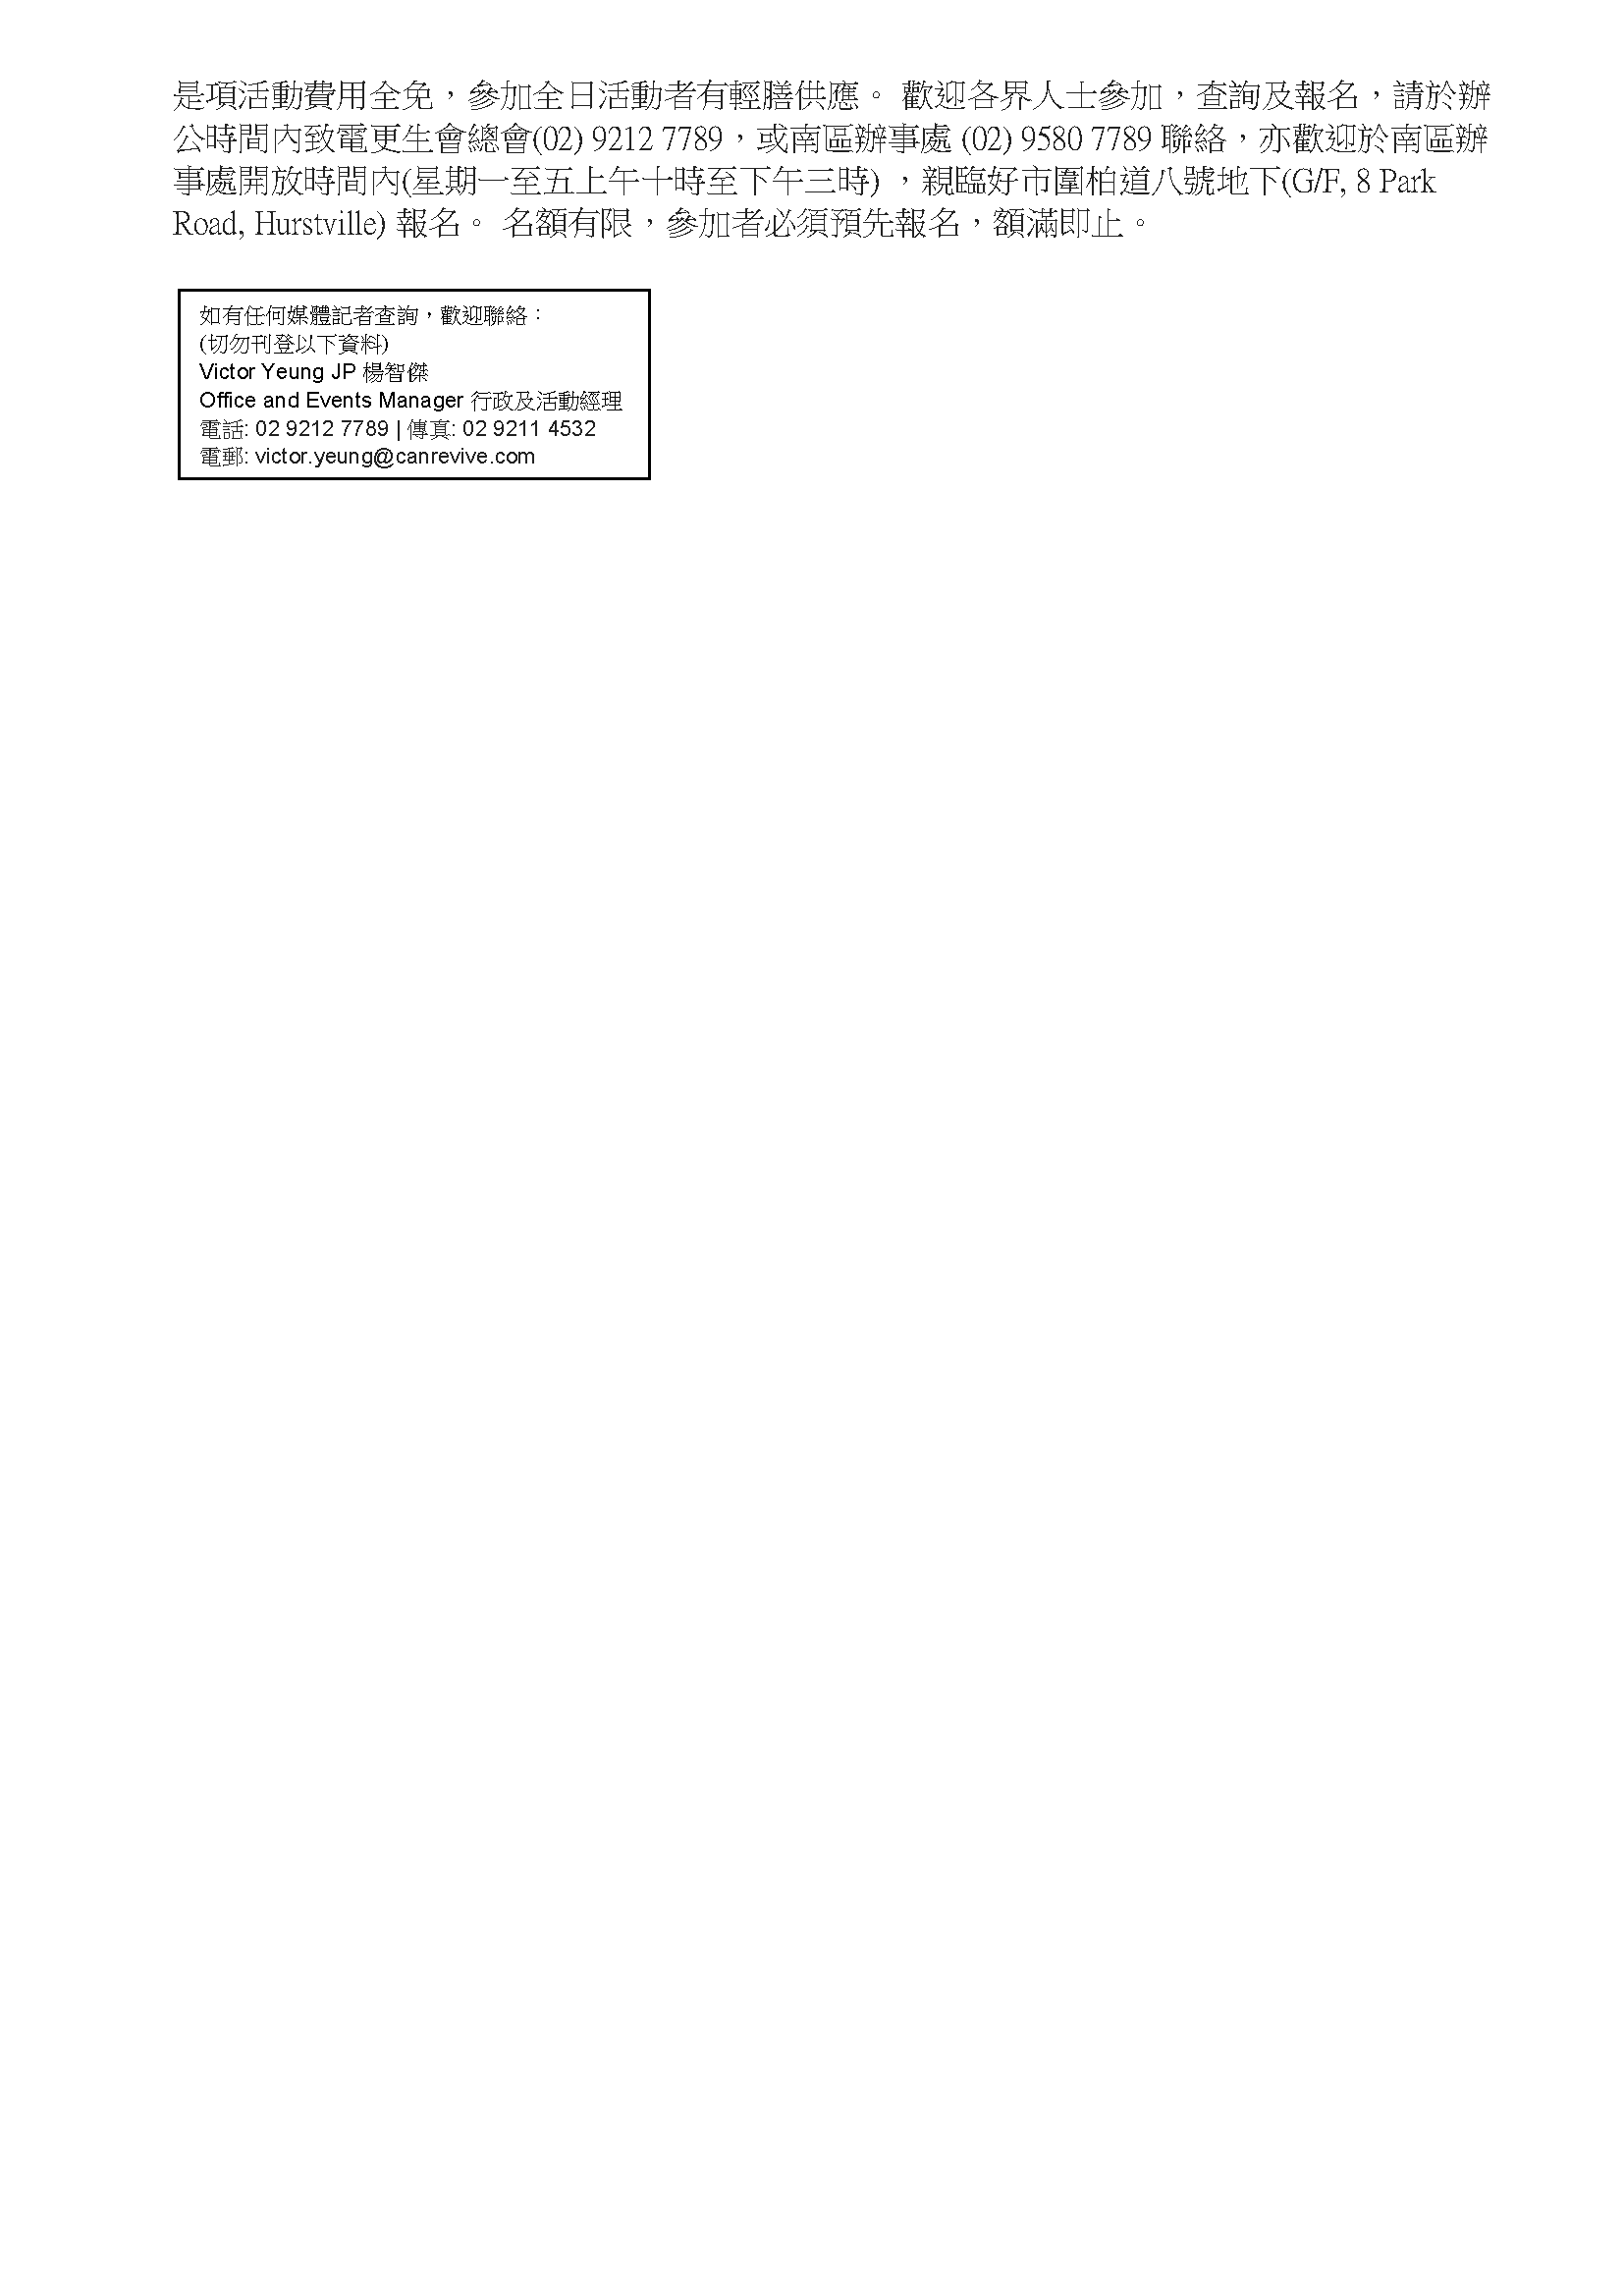 CR-PressRelease-CARID-HURS-MAY-4APR2019_Page_2